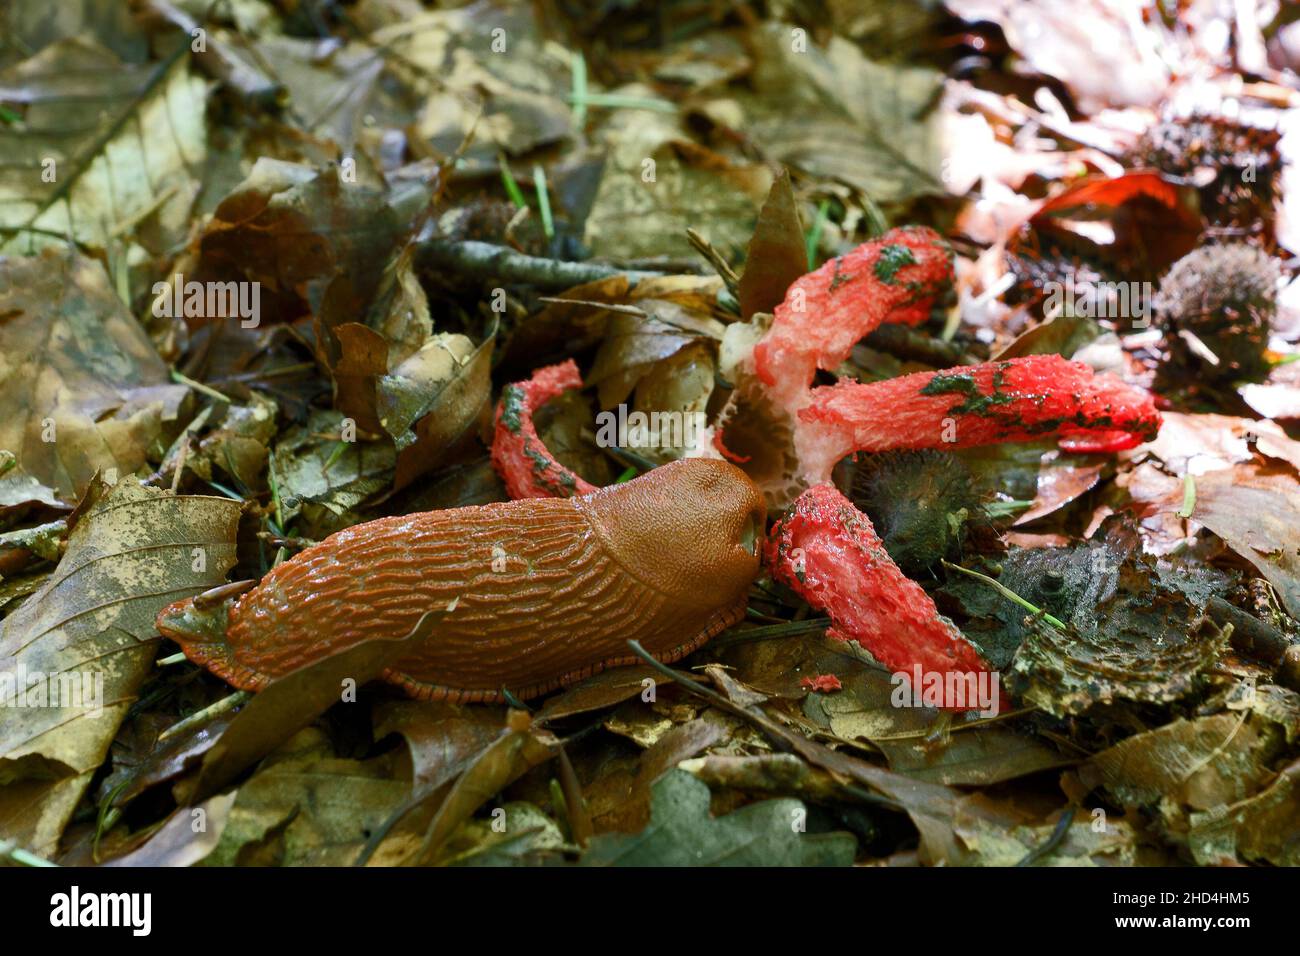 Snail eating mushroom (Clathrus archeri, known as octopus stinkhorn or devil's fingers) Stock Photo